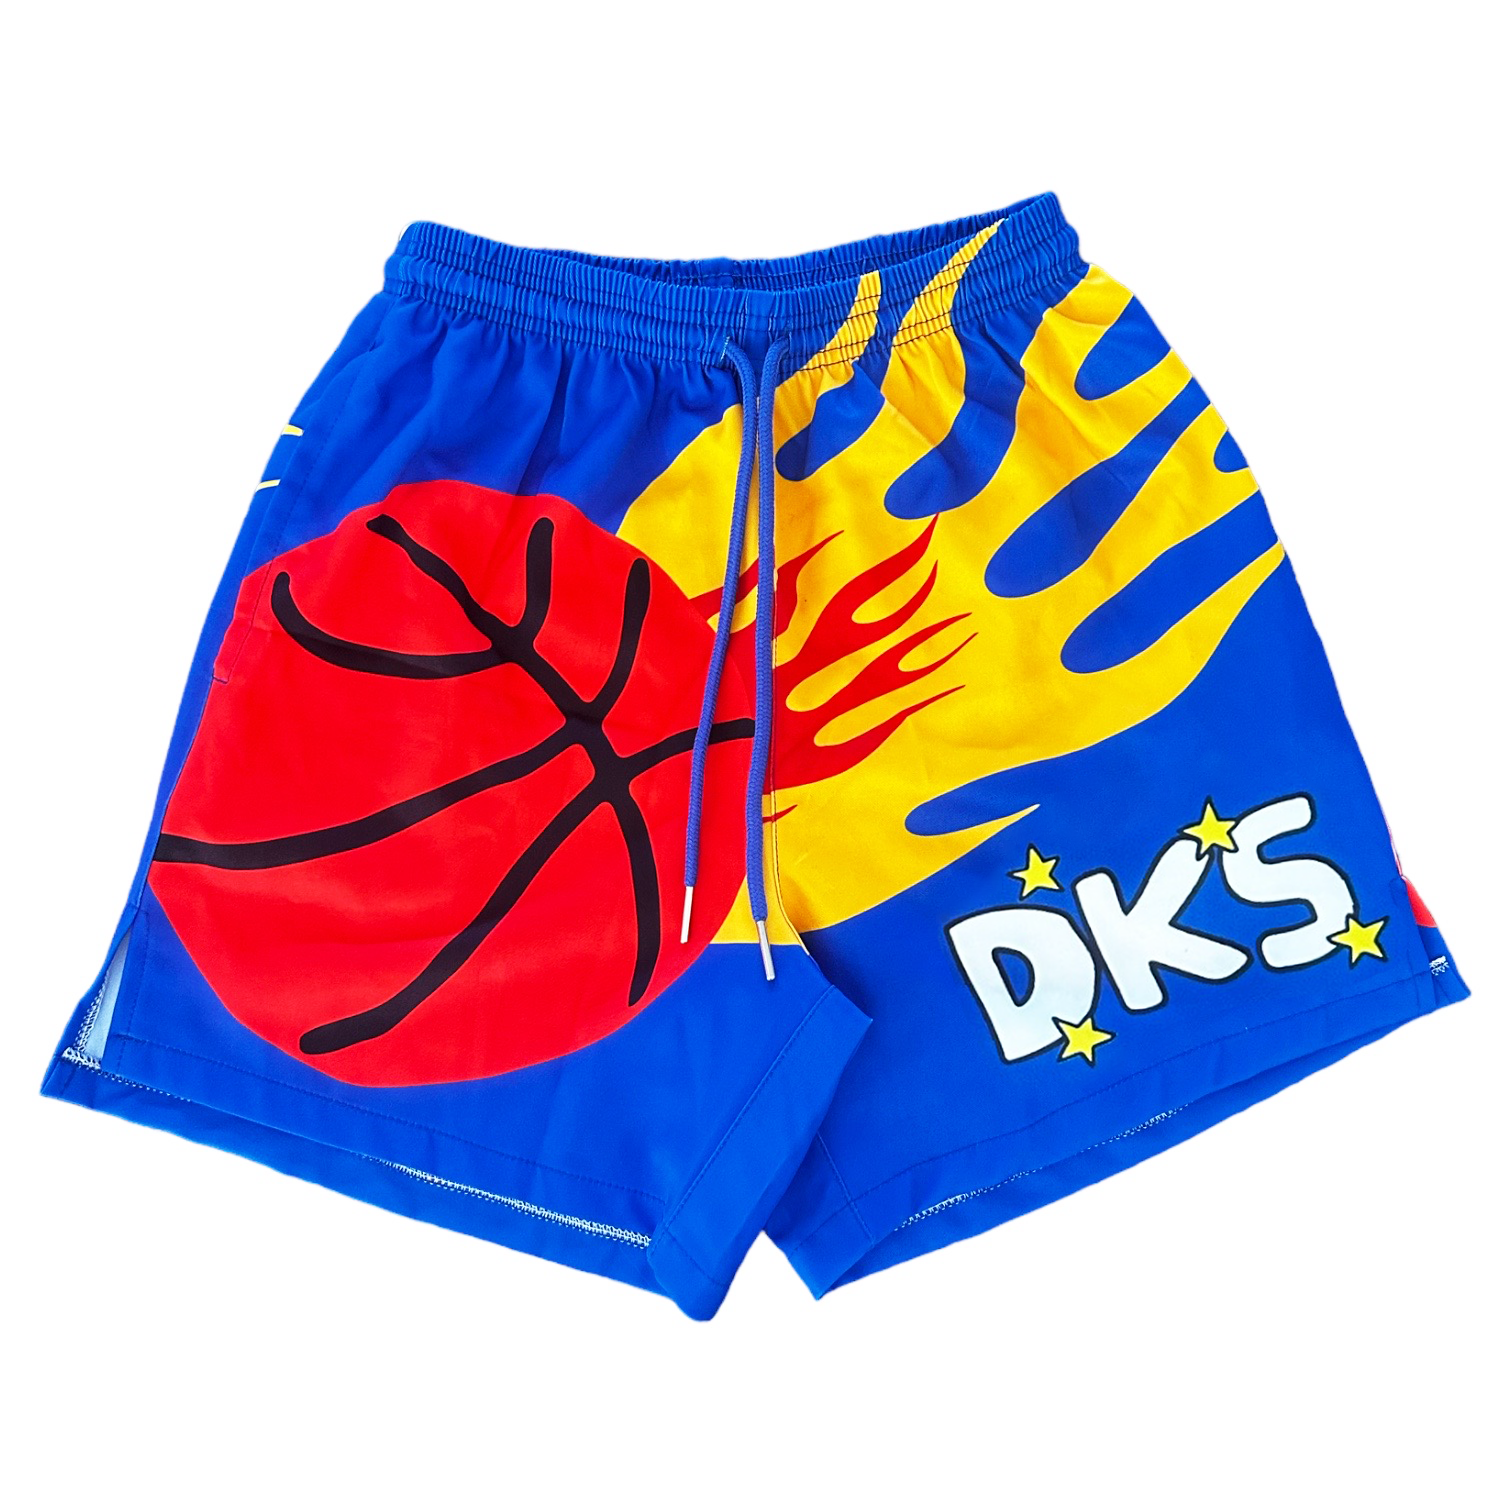 DKS "Hoops" Blue Lounge Shorts